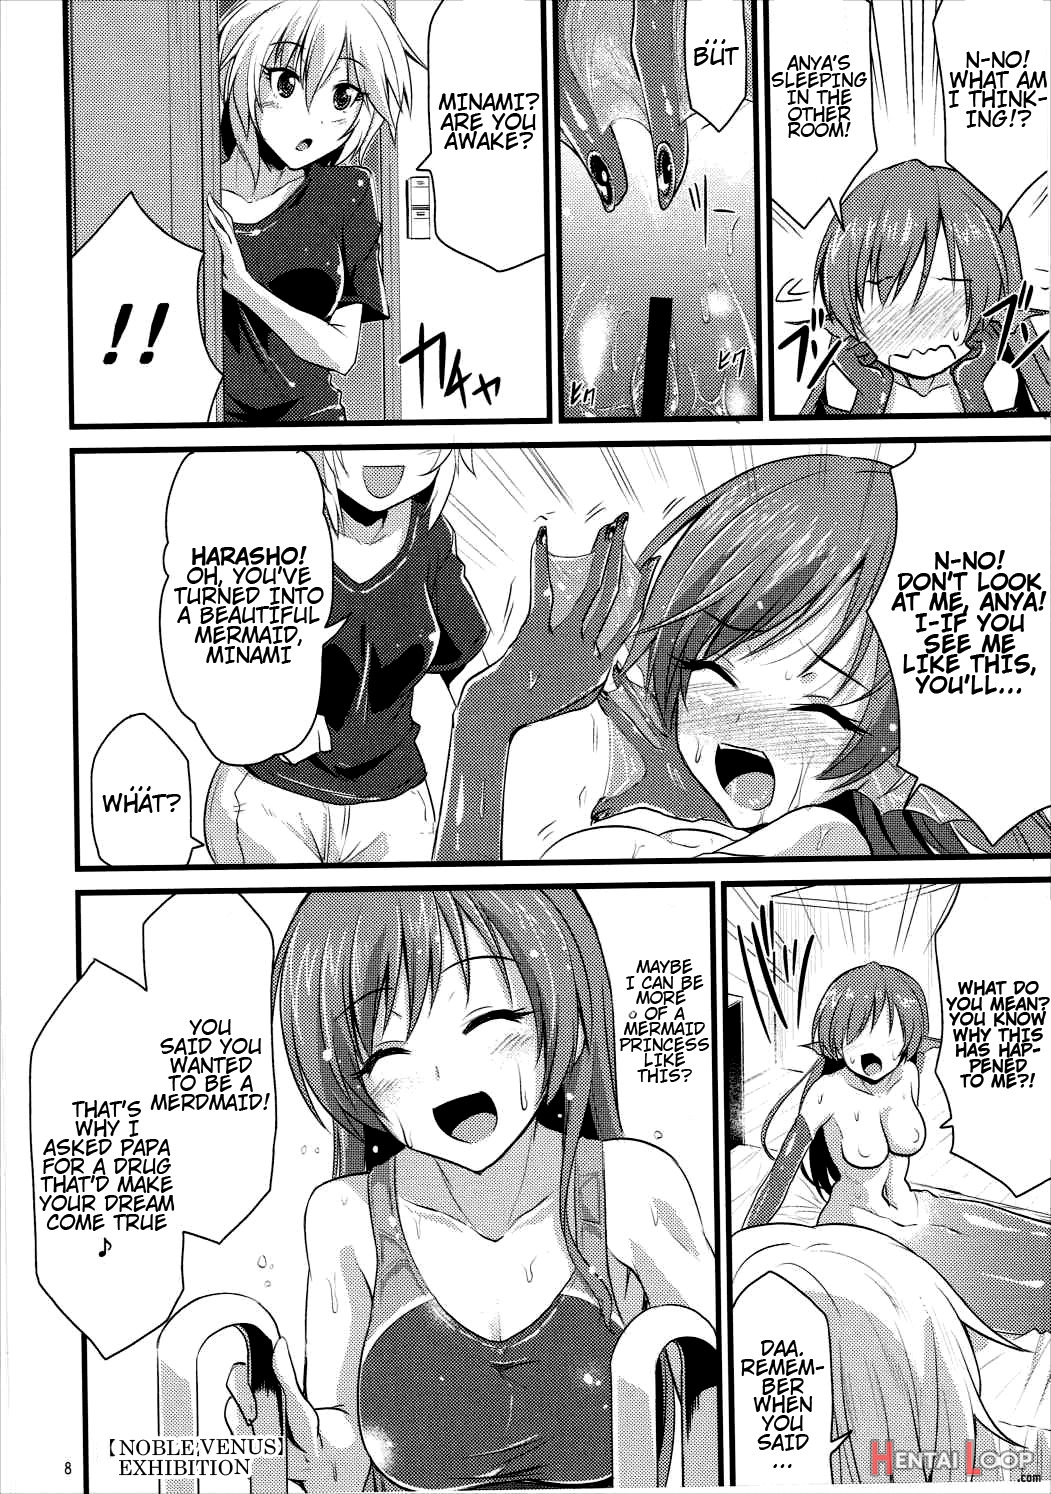 Minami Mermaid page 7